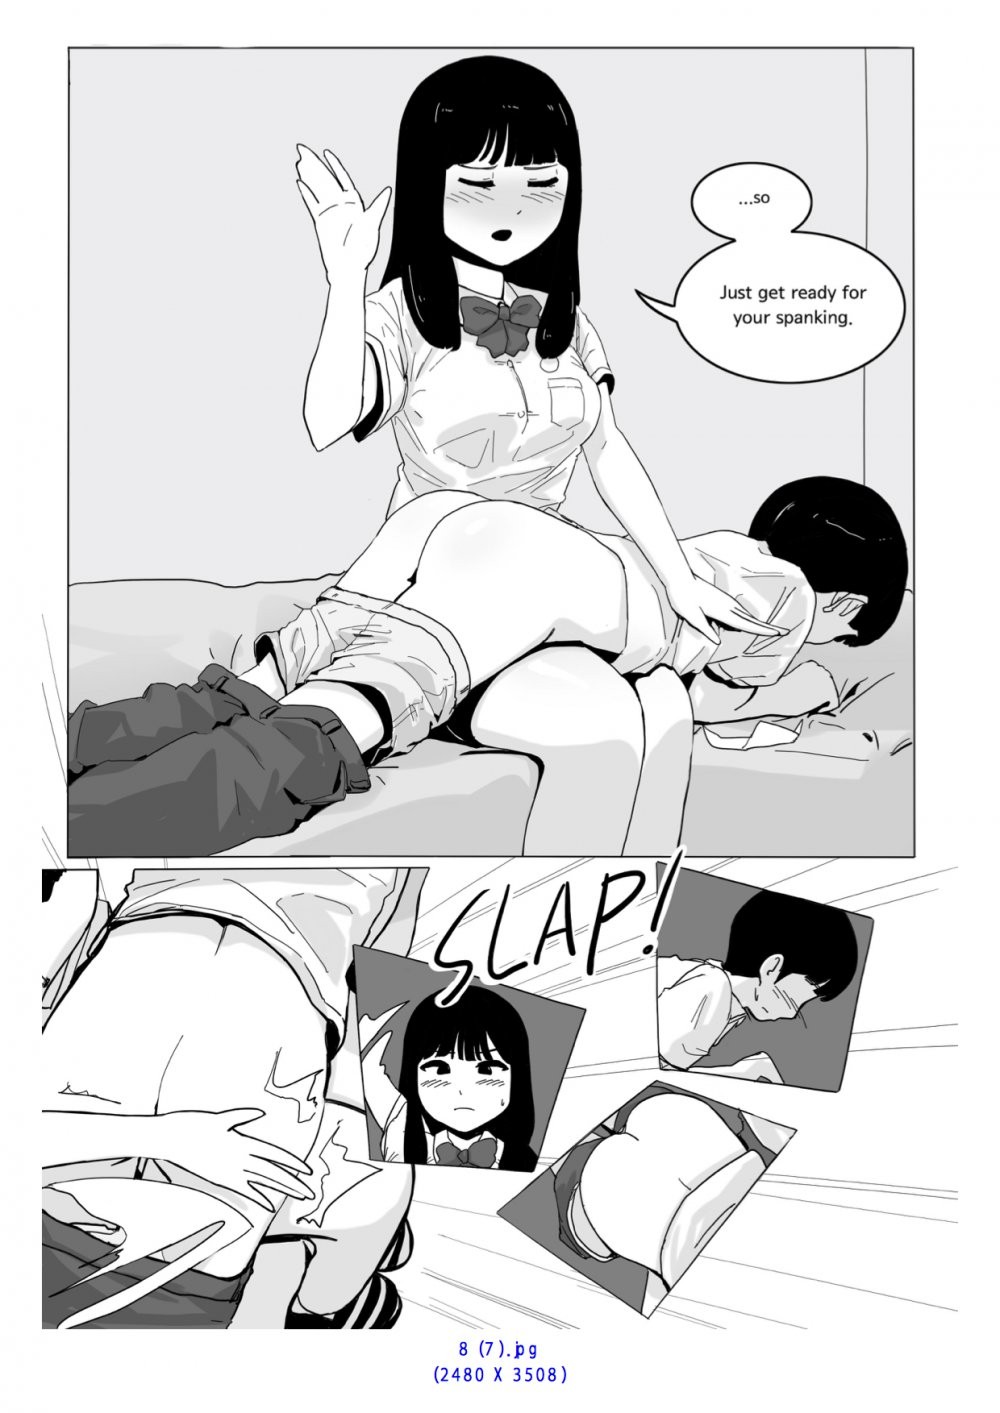 Spanking - Oshiritataki porn comic picture 25